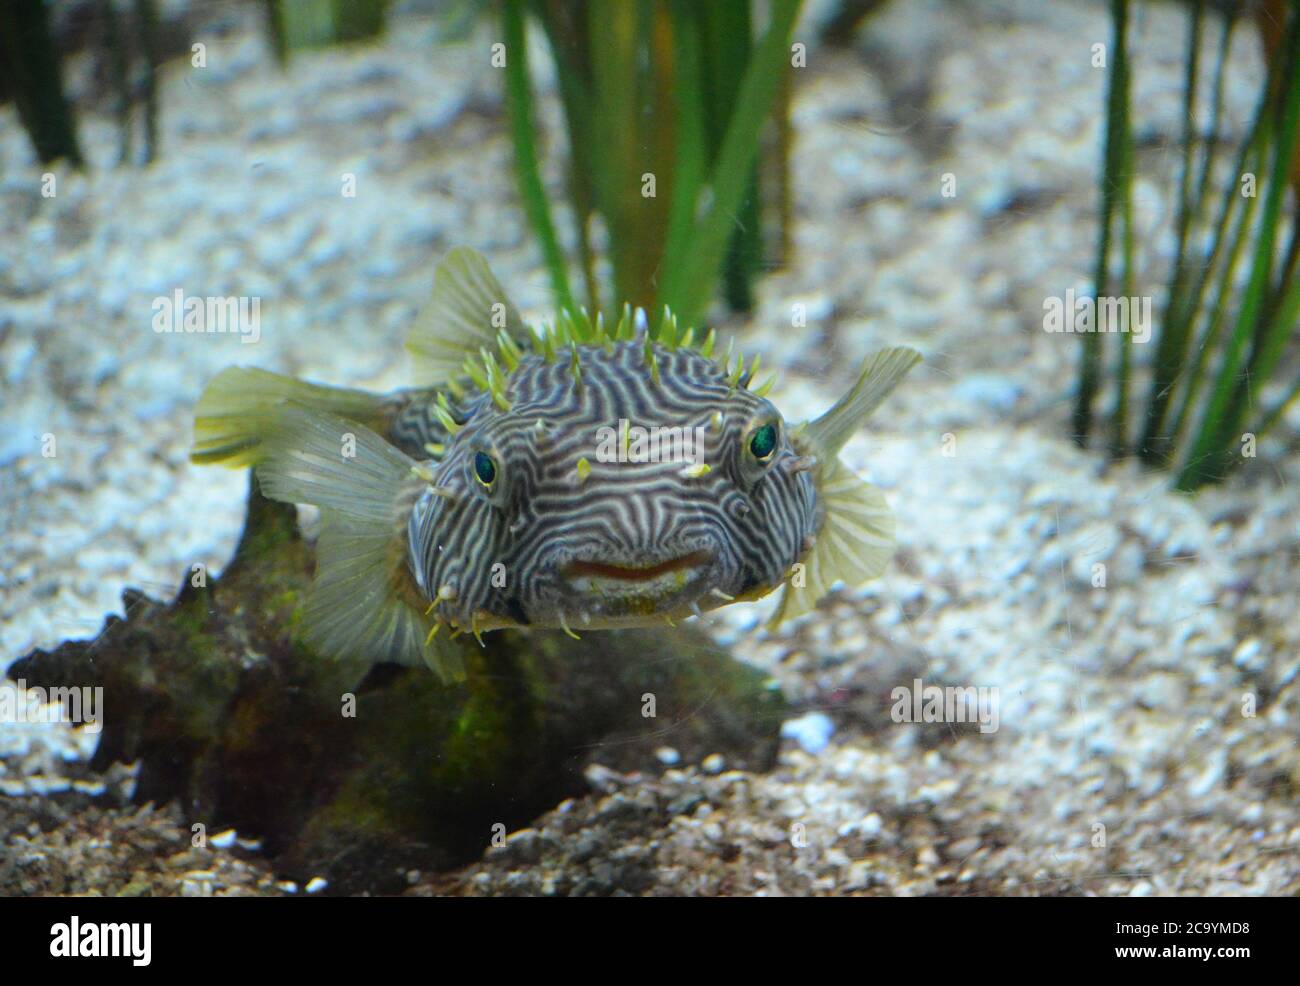 Spiny boxfish with striking green eyes swimming underwater. Stock Photo